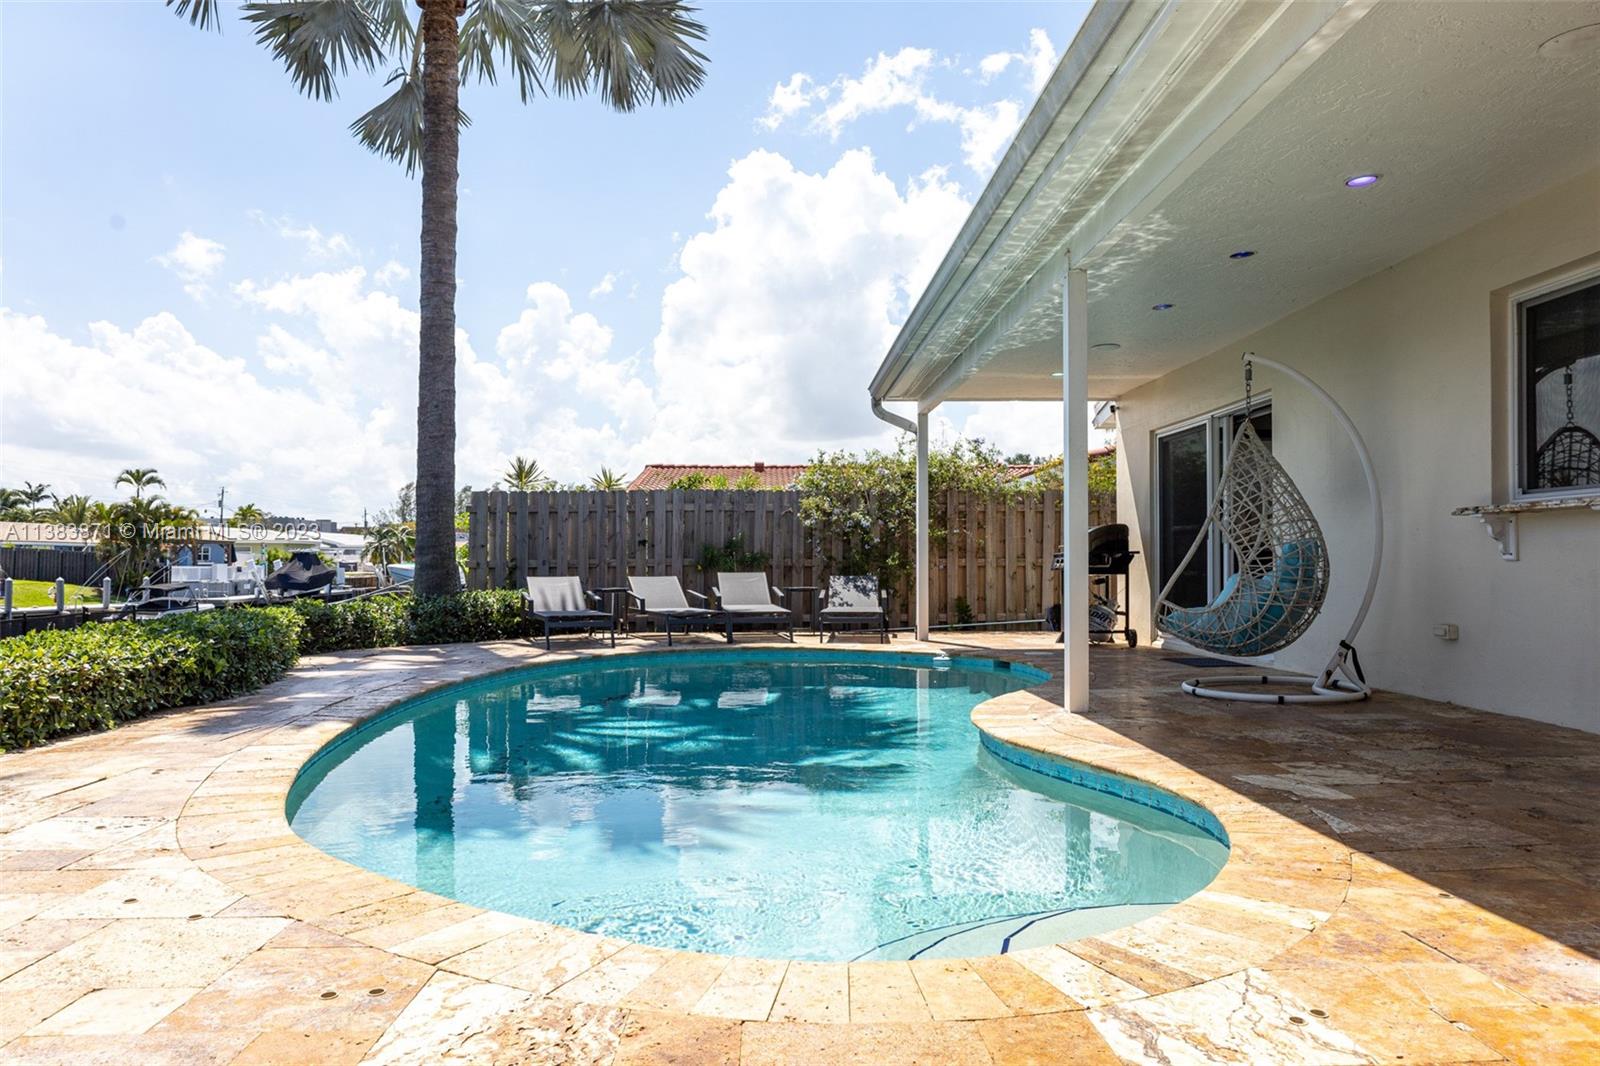 Rental Property at 1466 Ne 57th Ct, Fort Lauderdale, Broward County, Florida - Bedrooms: 3 
Bathrooms: 2  - $8,500 MO.